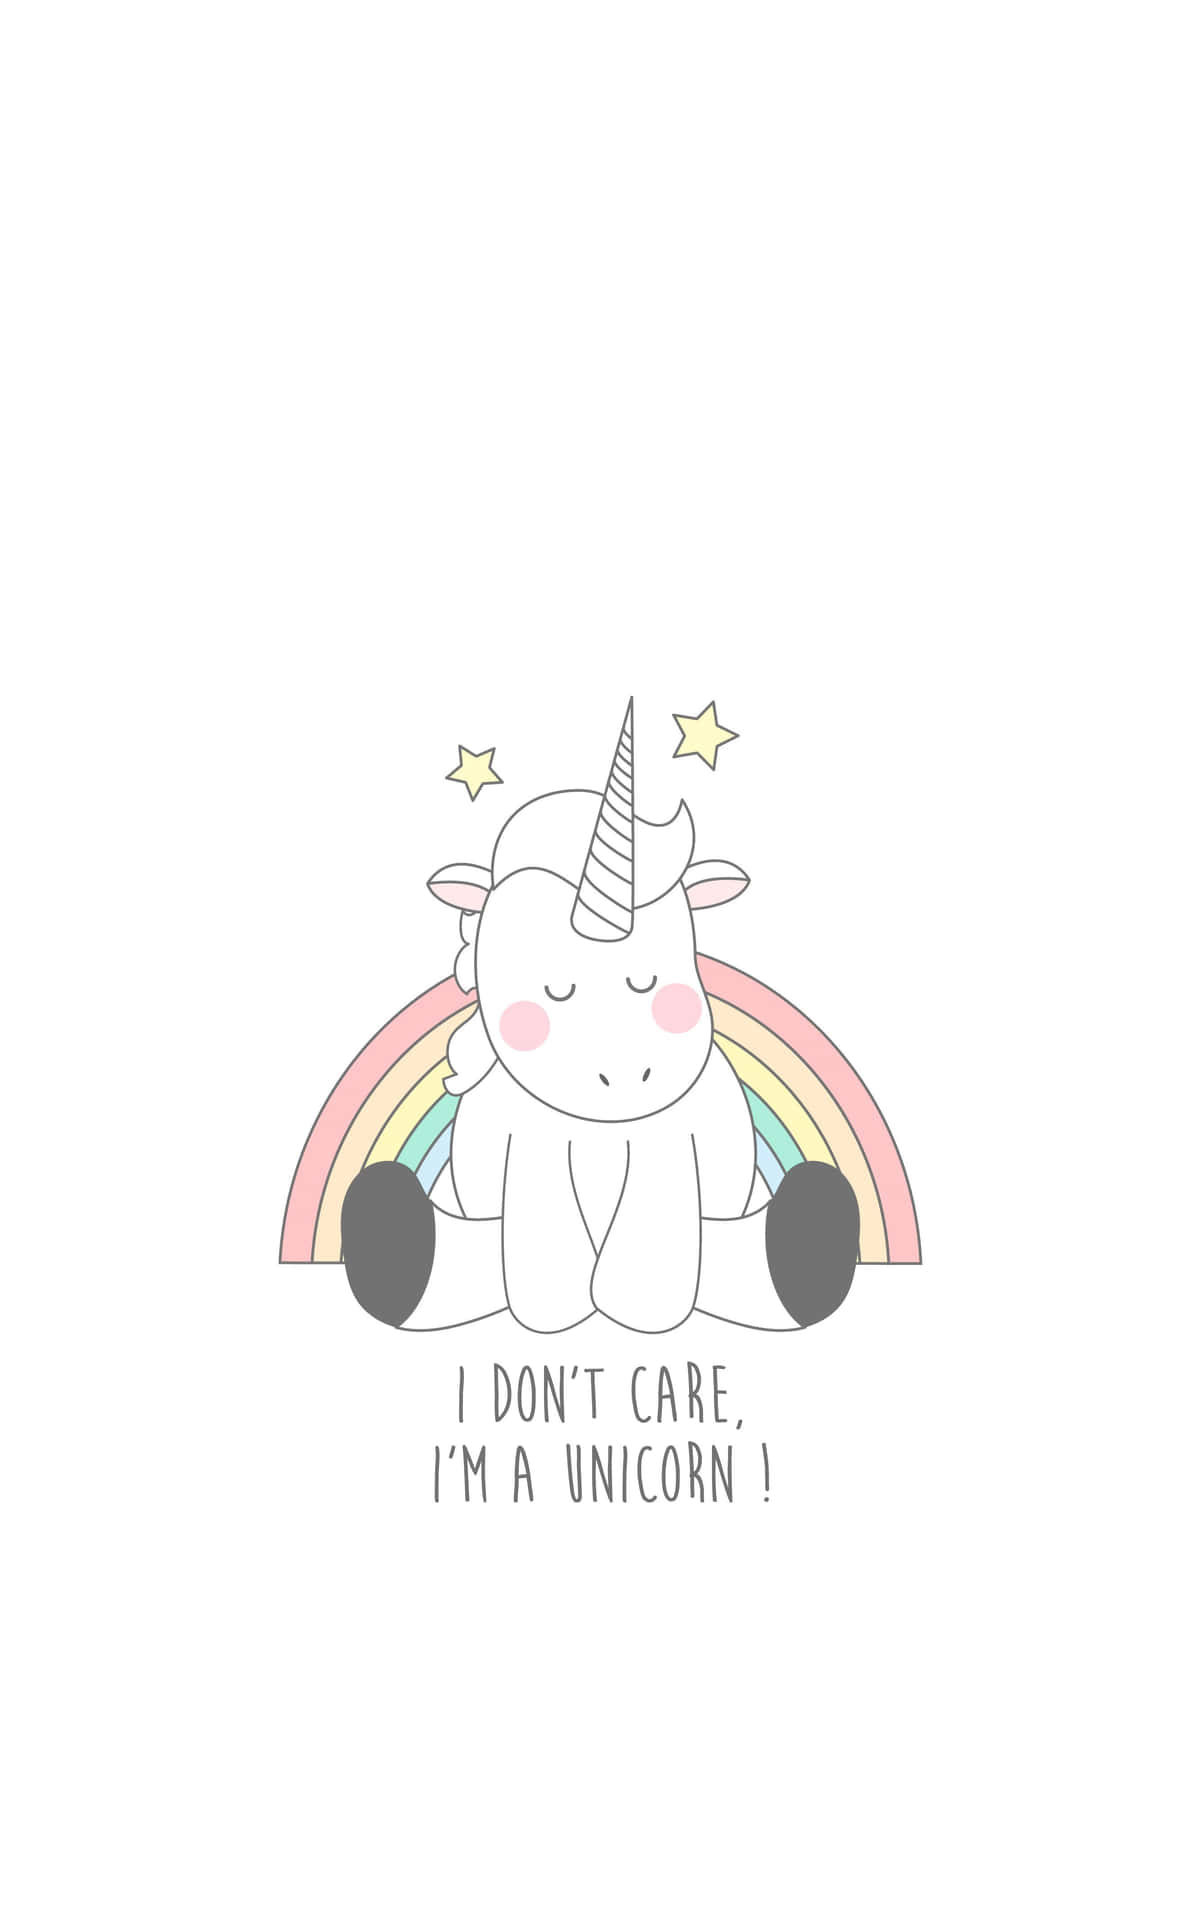 Cute Unicorn I Don't Care Illustration Art Picture